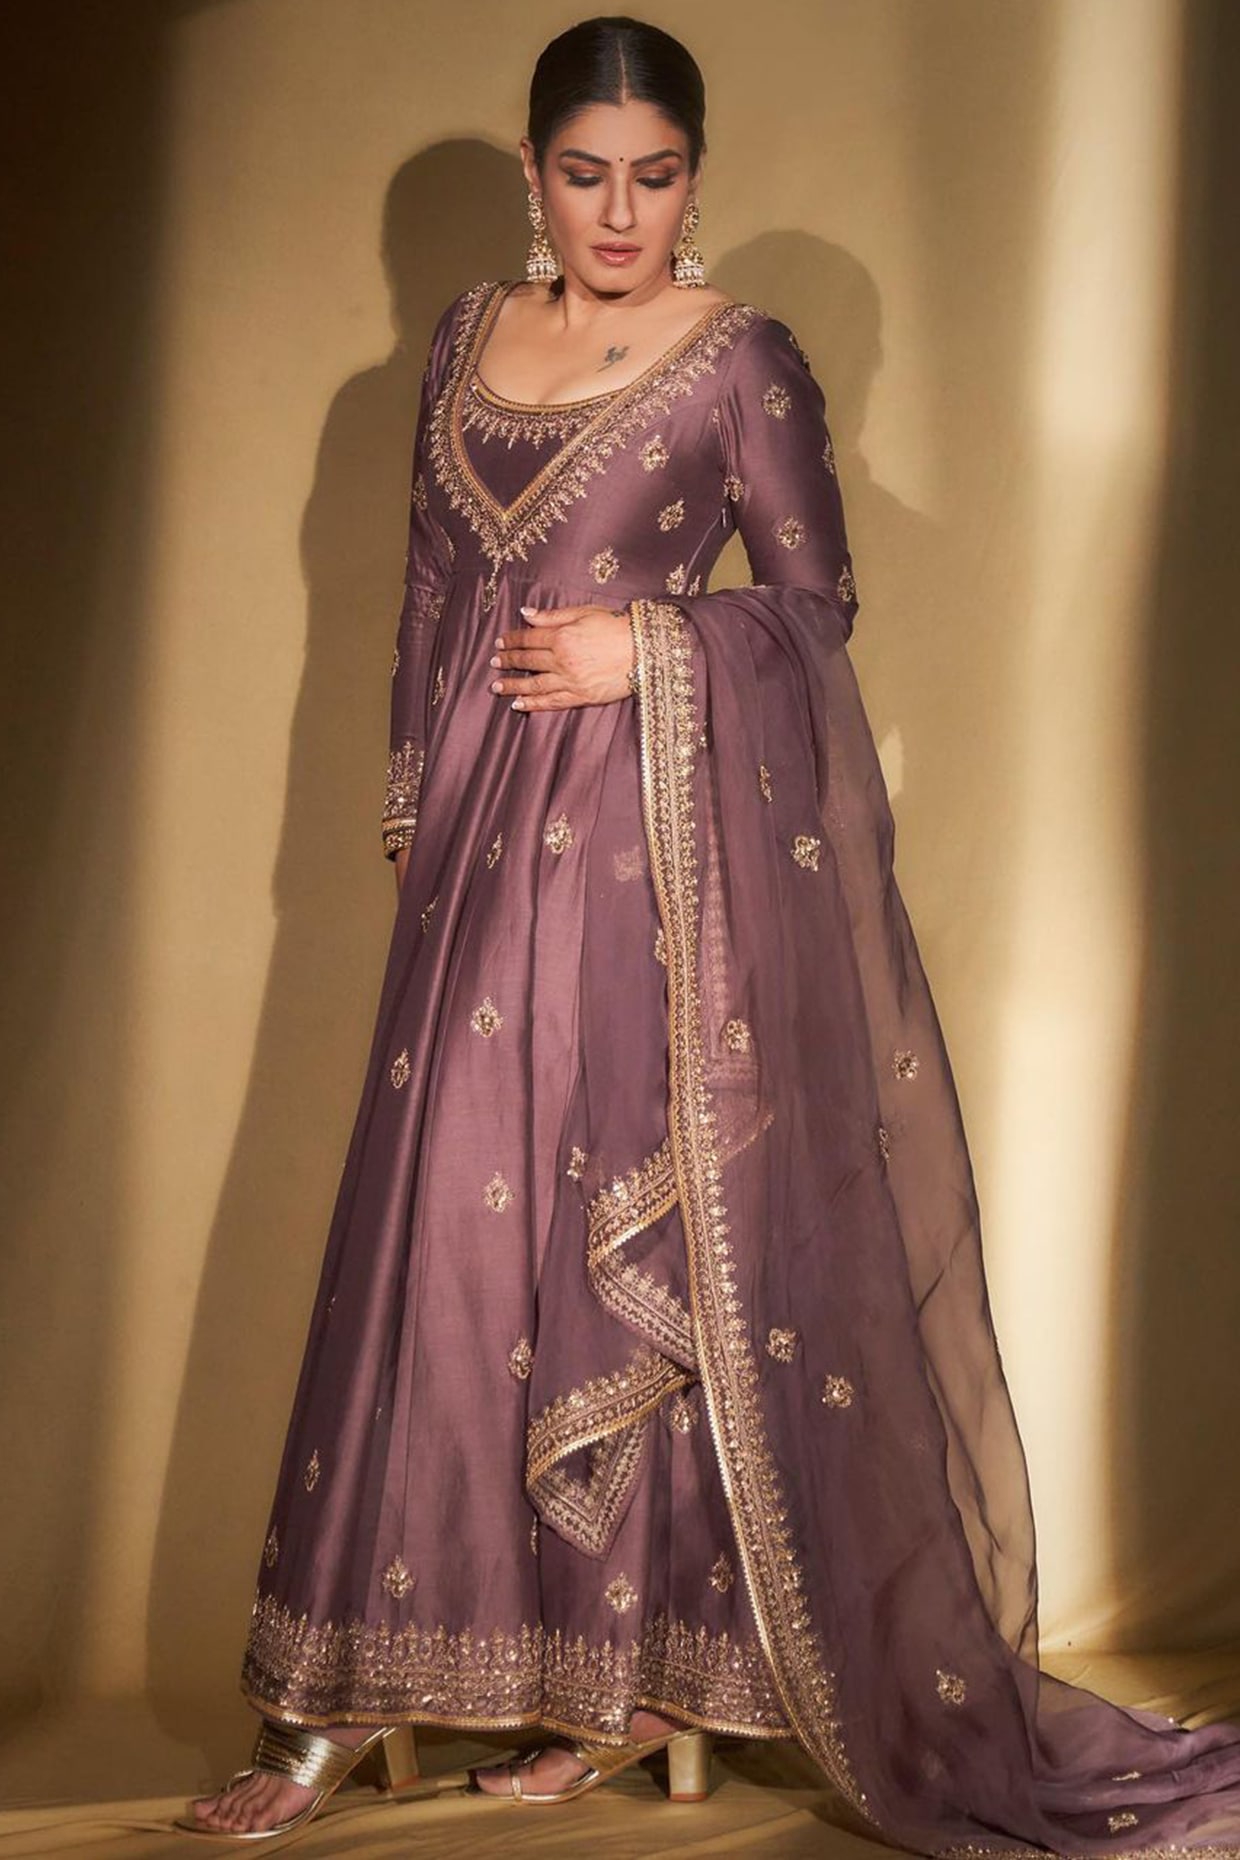 Raveena Tandon Looked Traditional In Tarun Tahiliani's Designer Saree –  Lady India